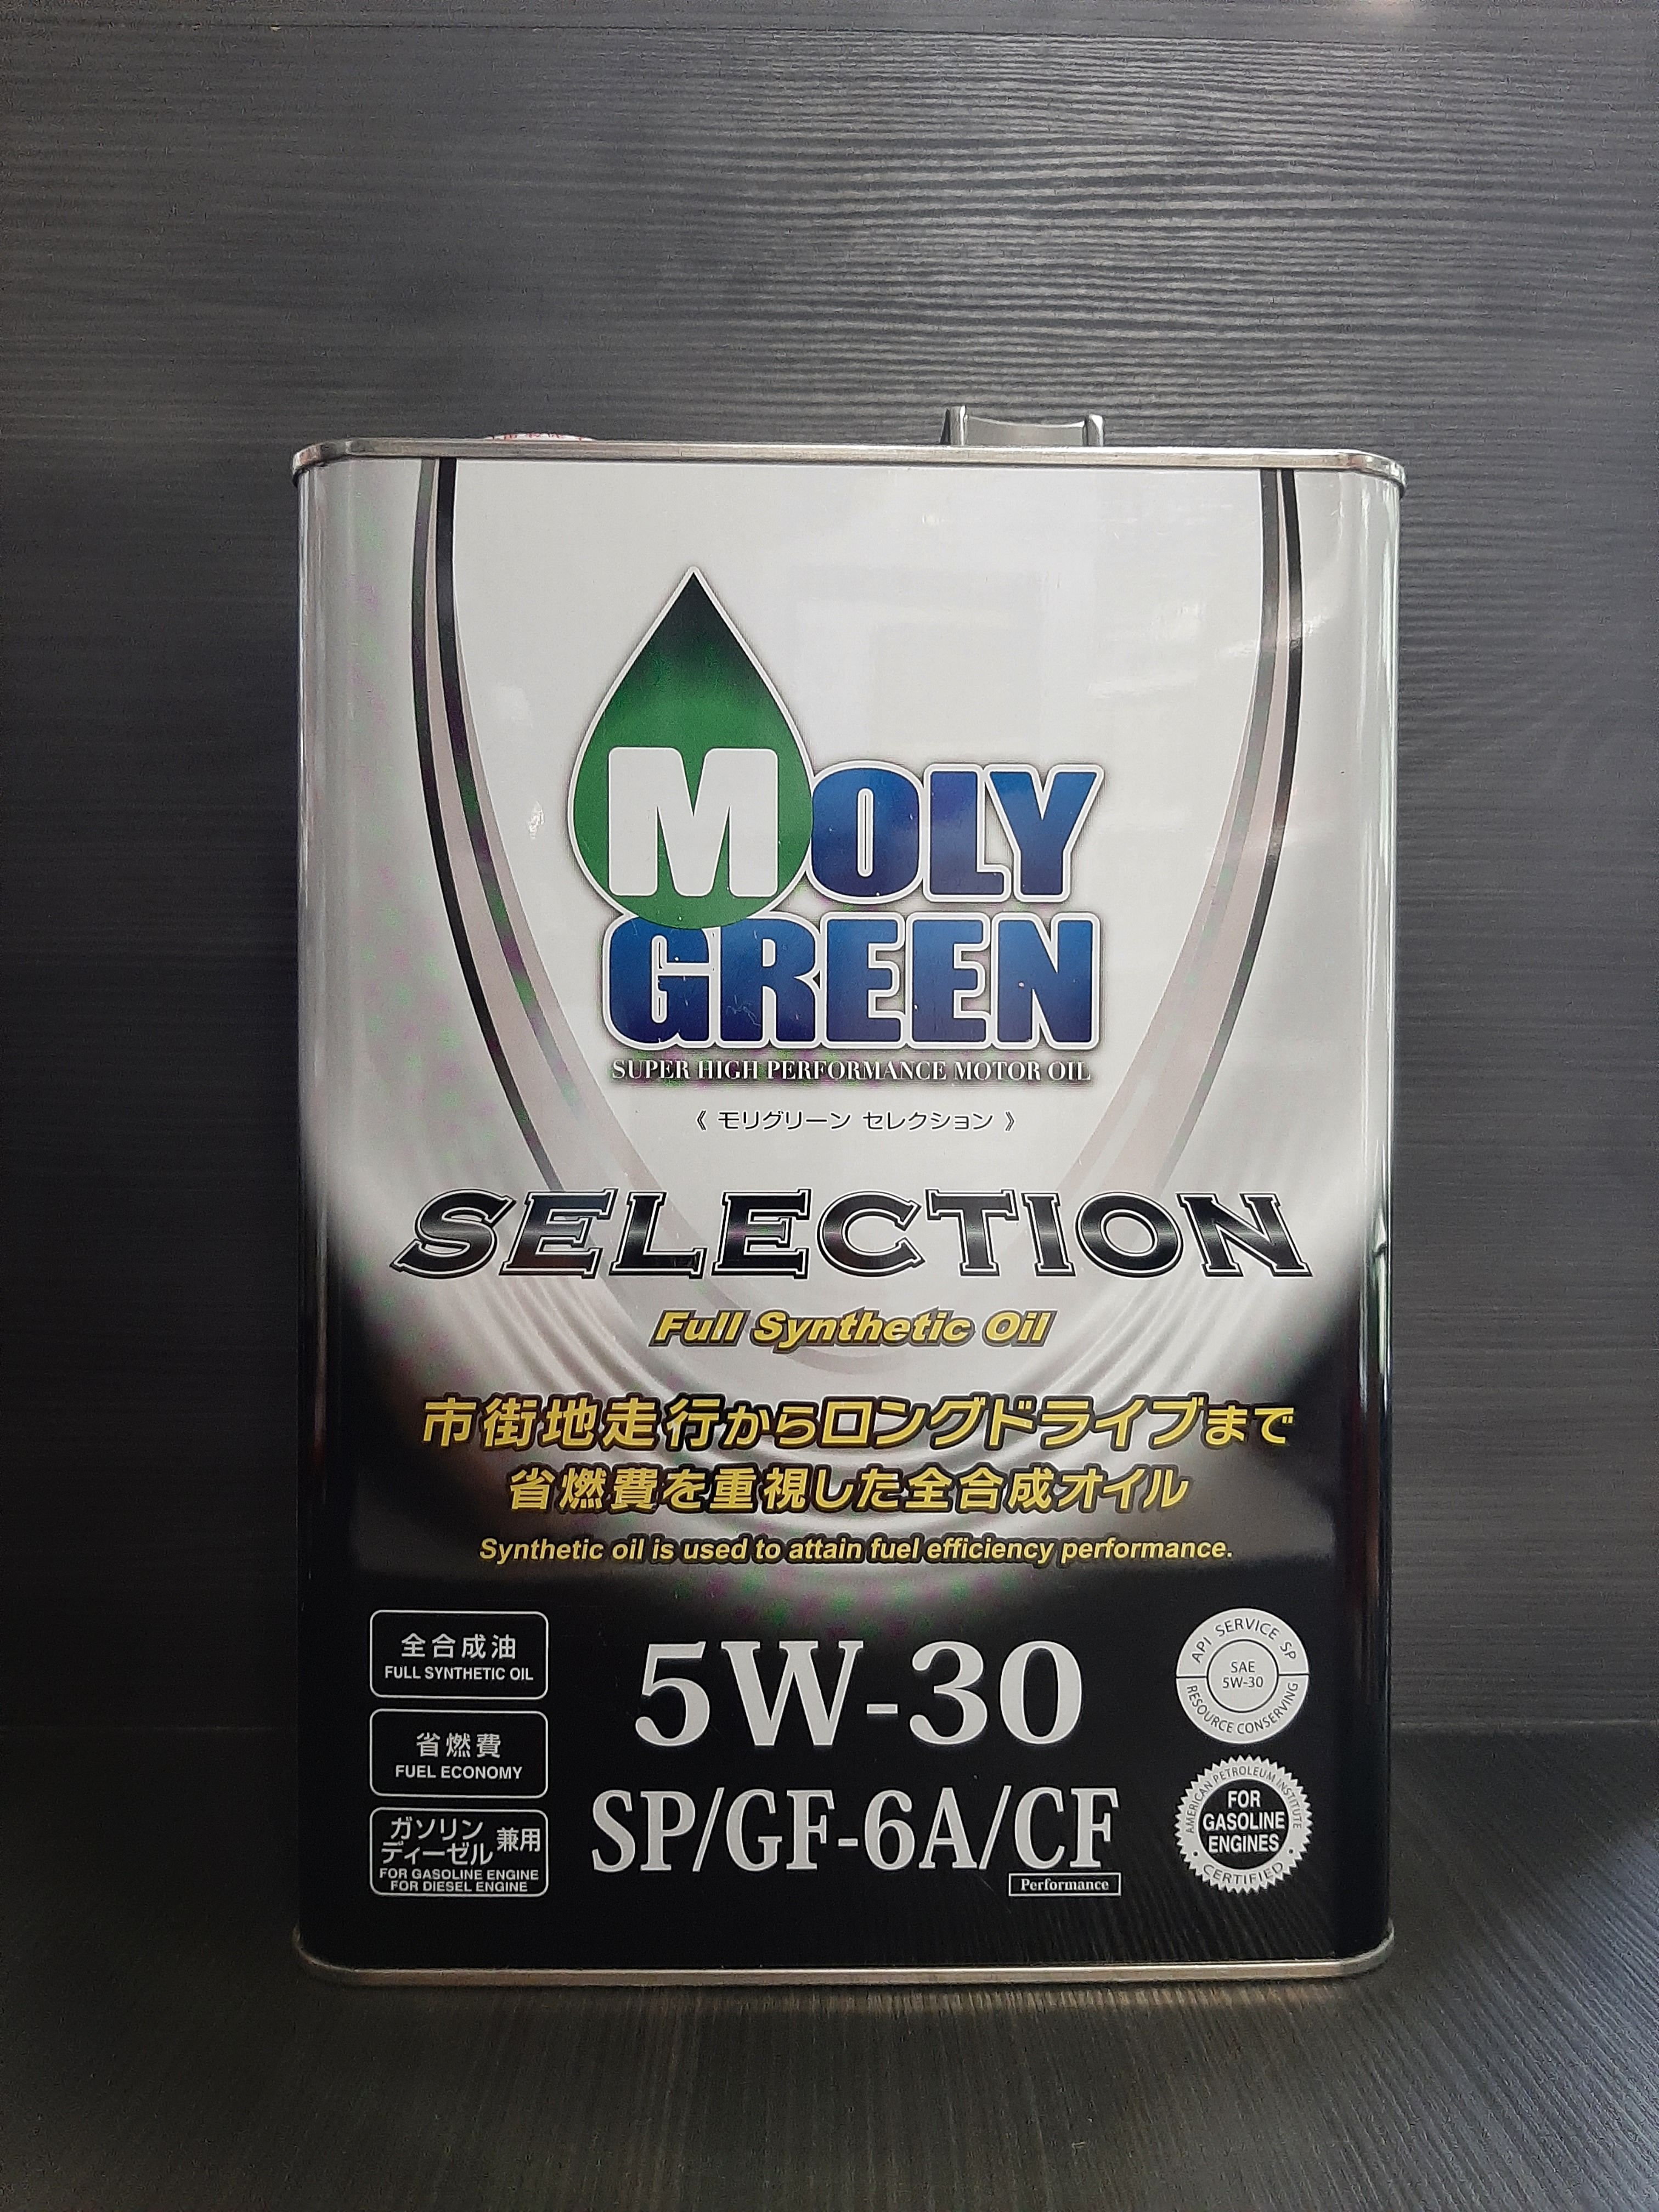 Моторное масло моли грин 5w30. Моторное масло Moly Green 5w30. Масло Молли Грин 5w30. Моли Грин 5w30 полусинтетика. Молигрин 5w30 производство.